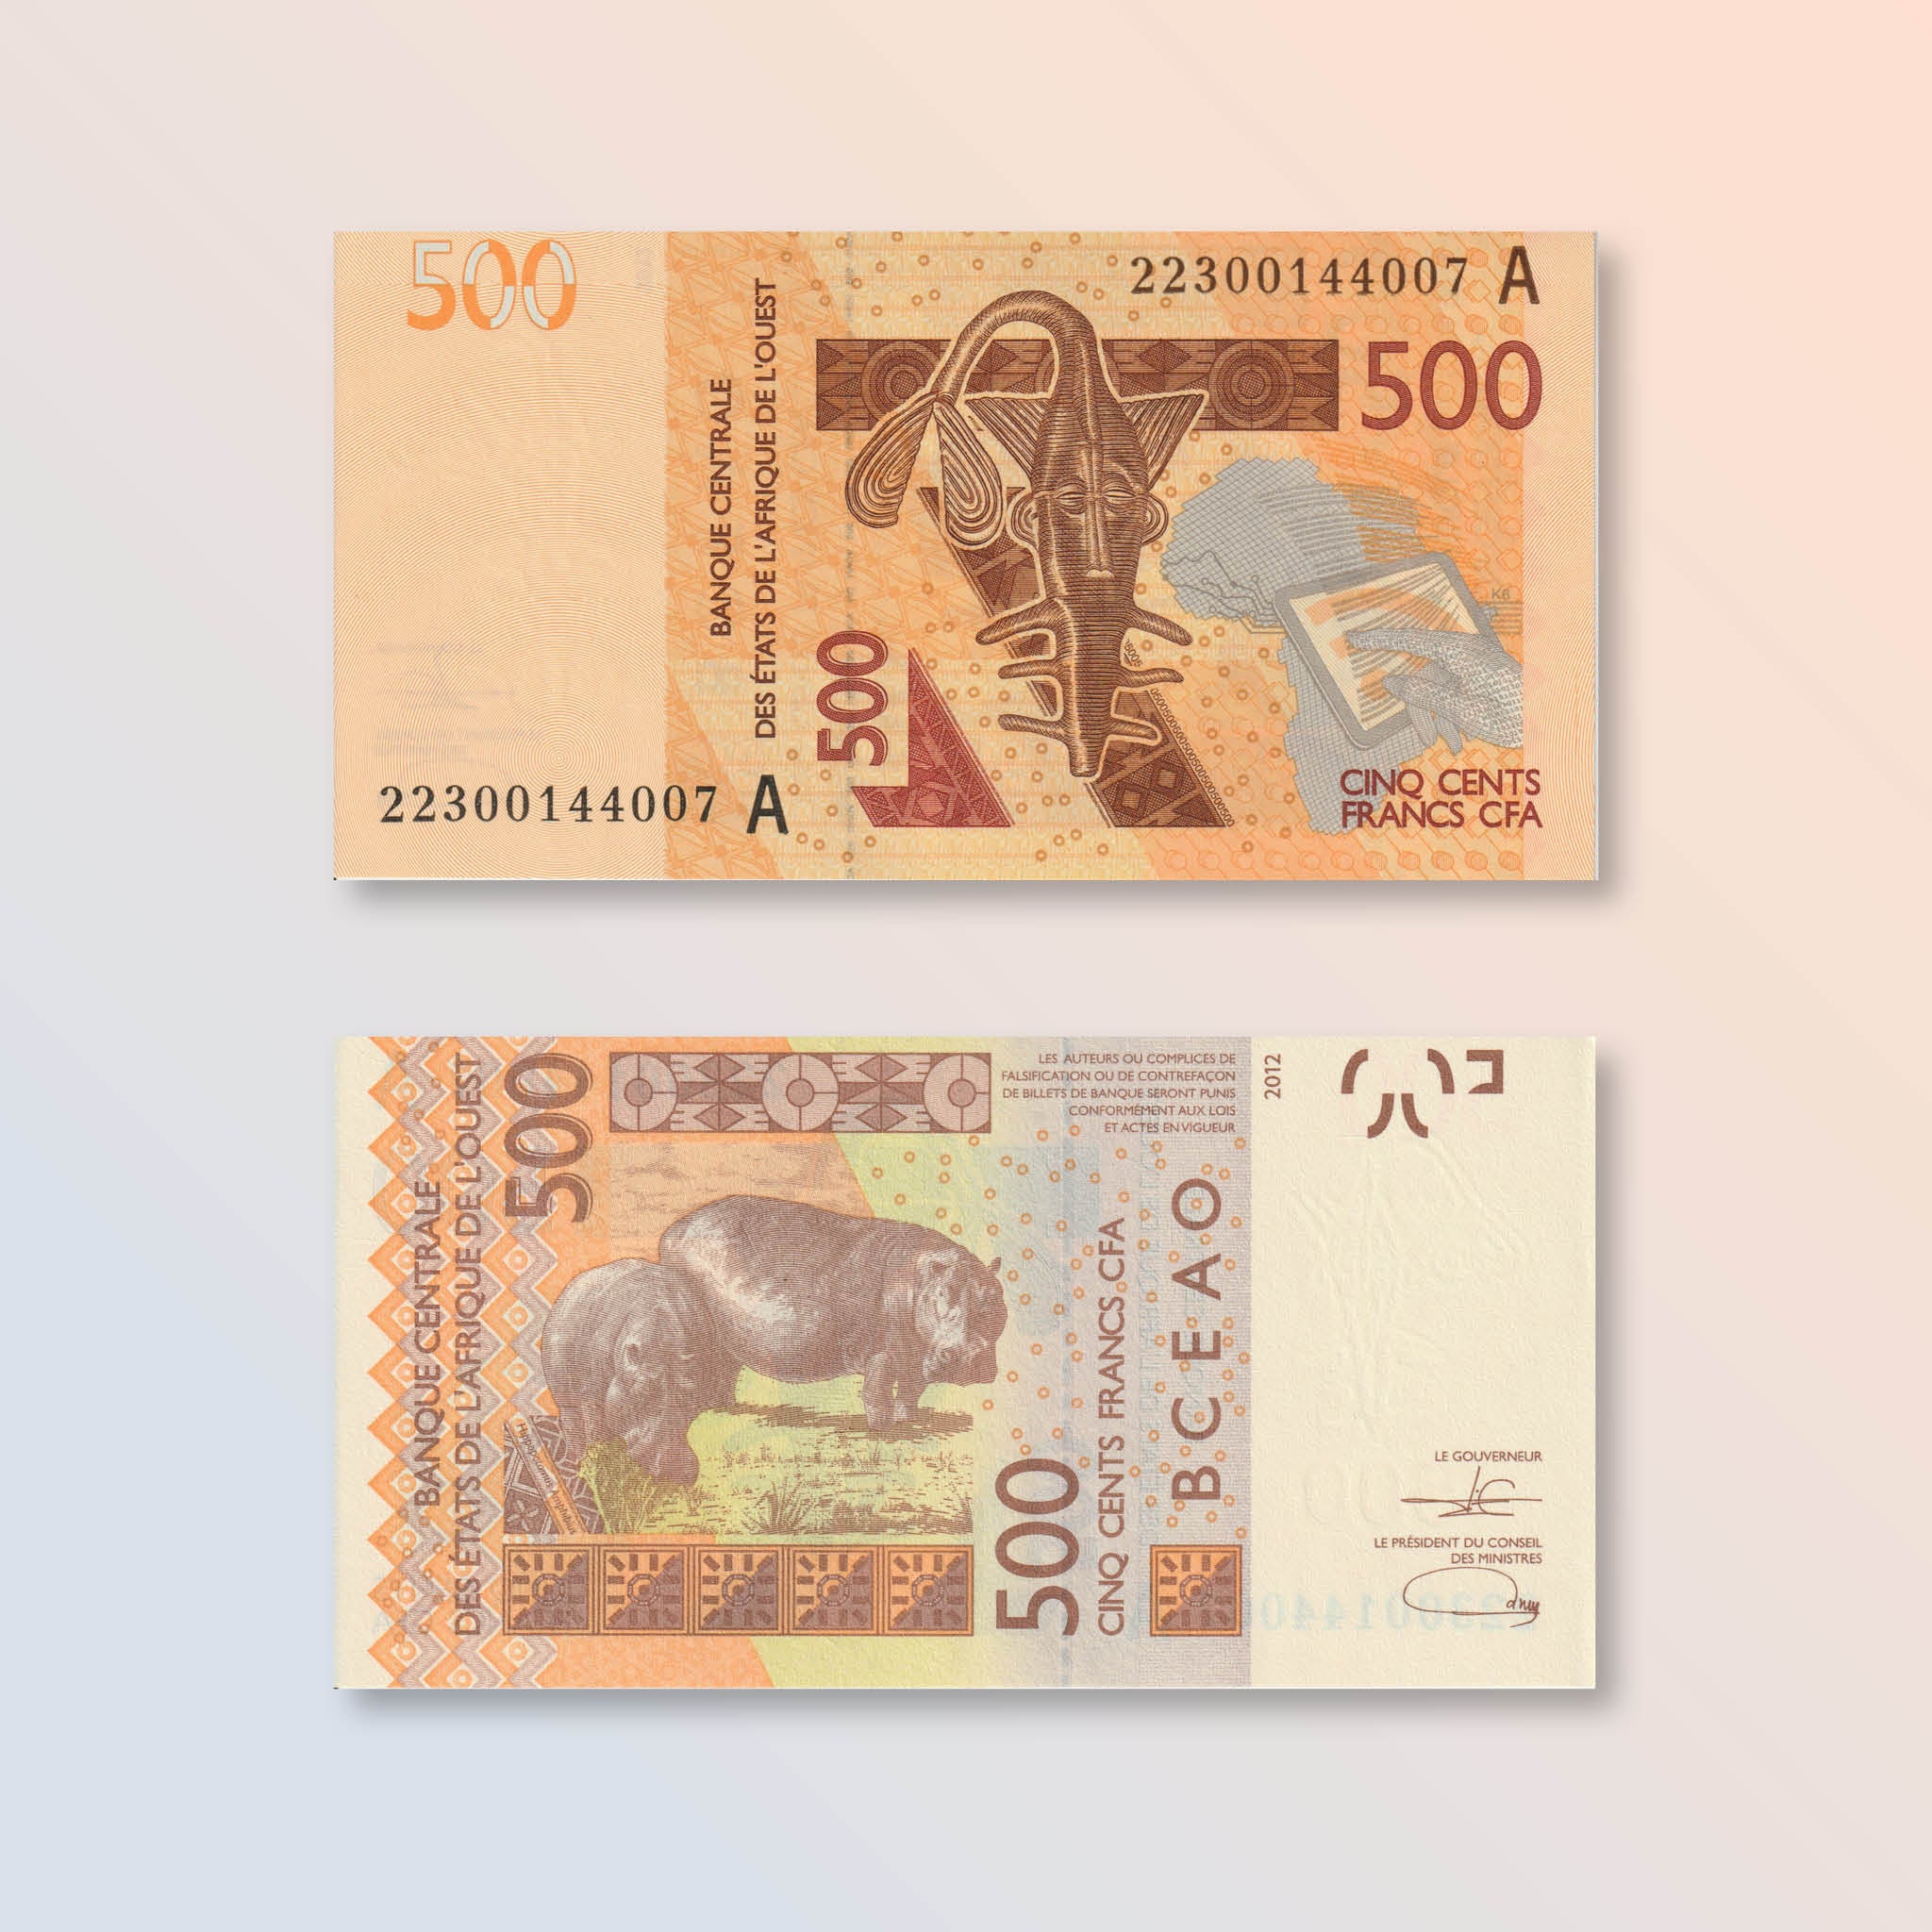 West African States, Ivory Coast, 500 Francs, 2022, B120Ak, P119A, UNC - Robert's World Money - World Banknotes